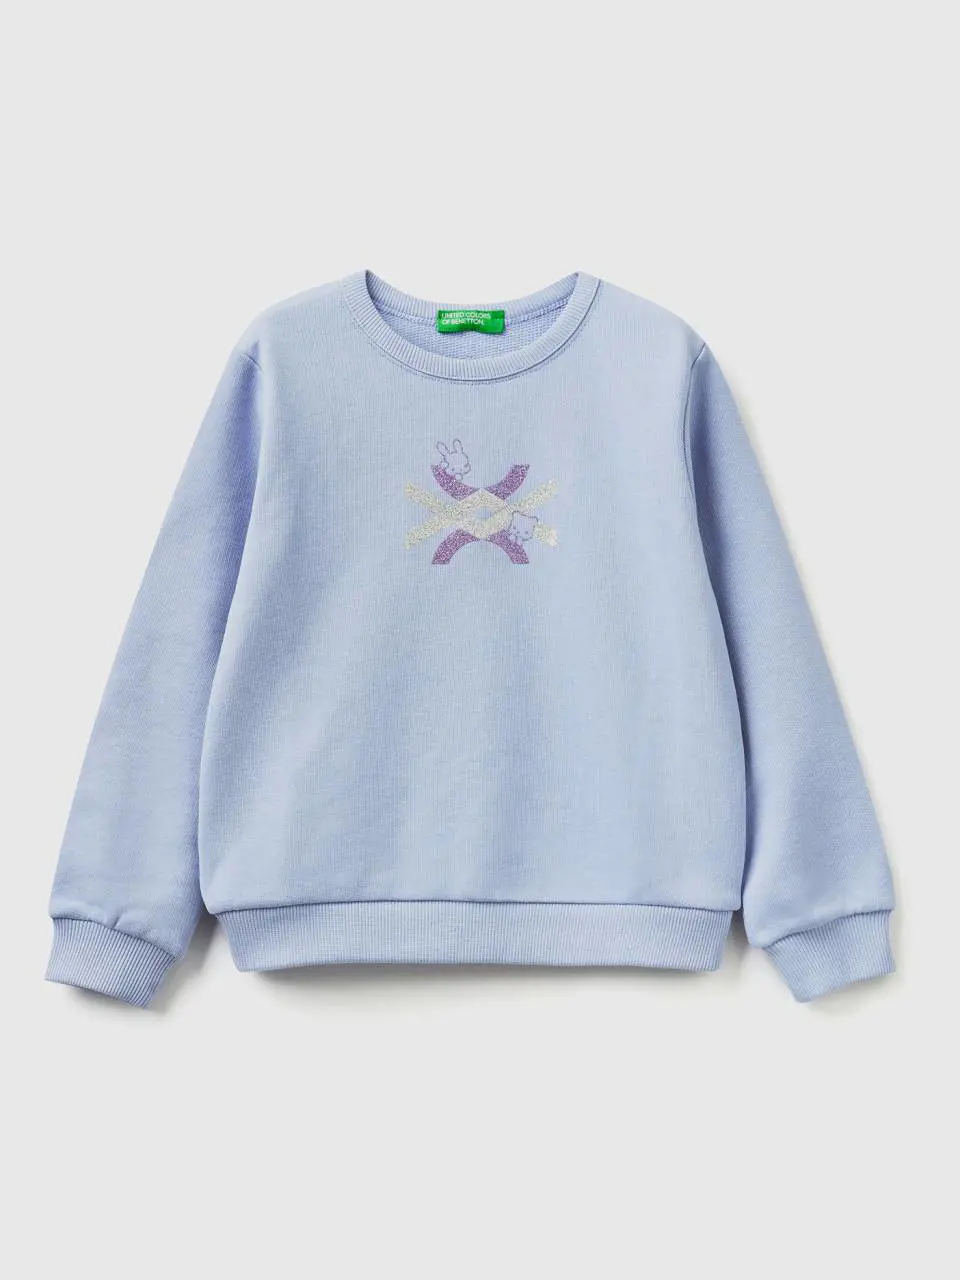 Benetton lilac sweatshirt in organic cotton with glittery print. 1